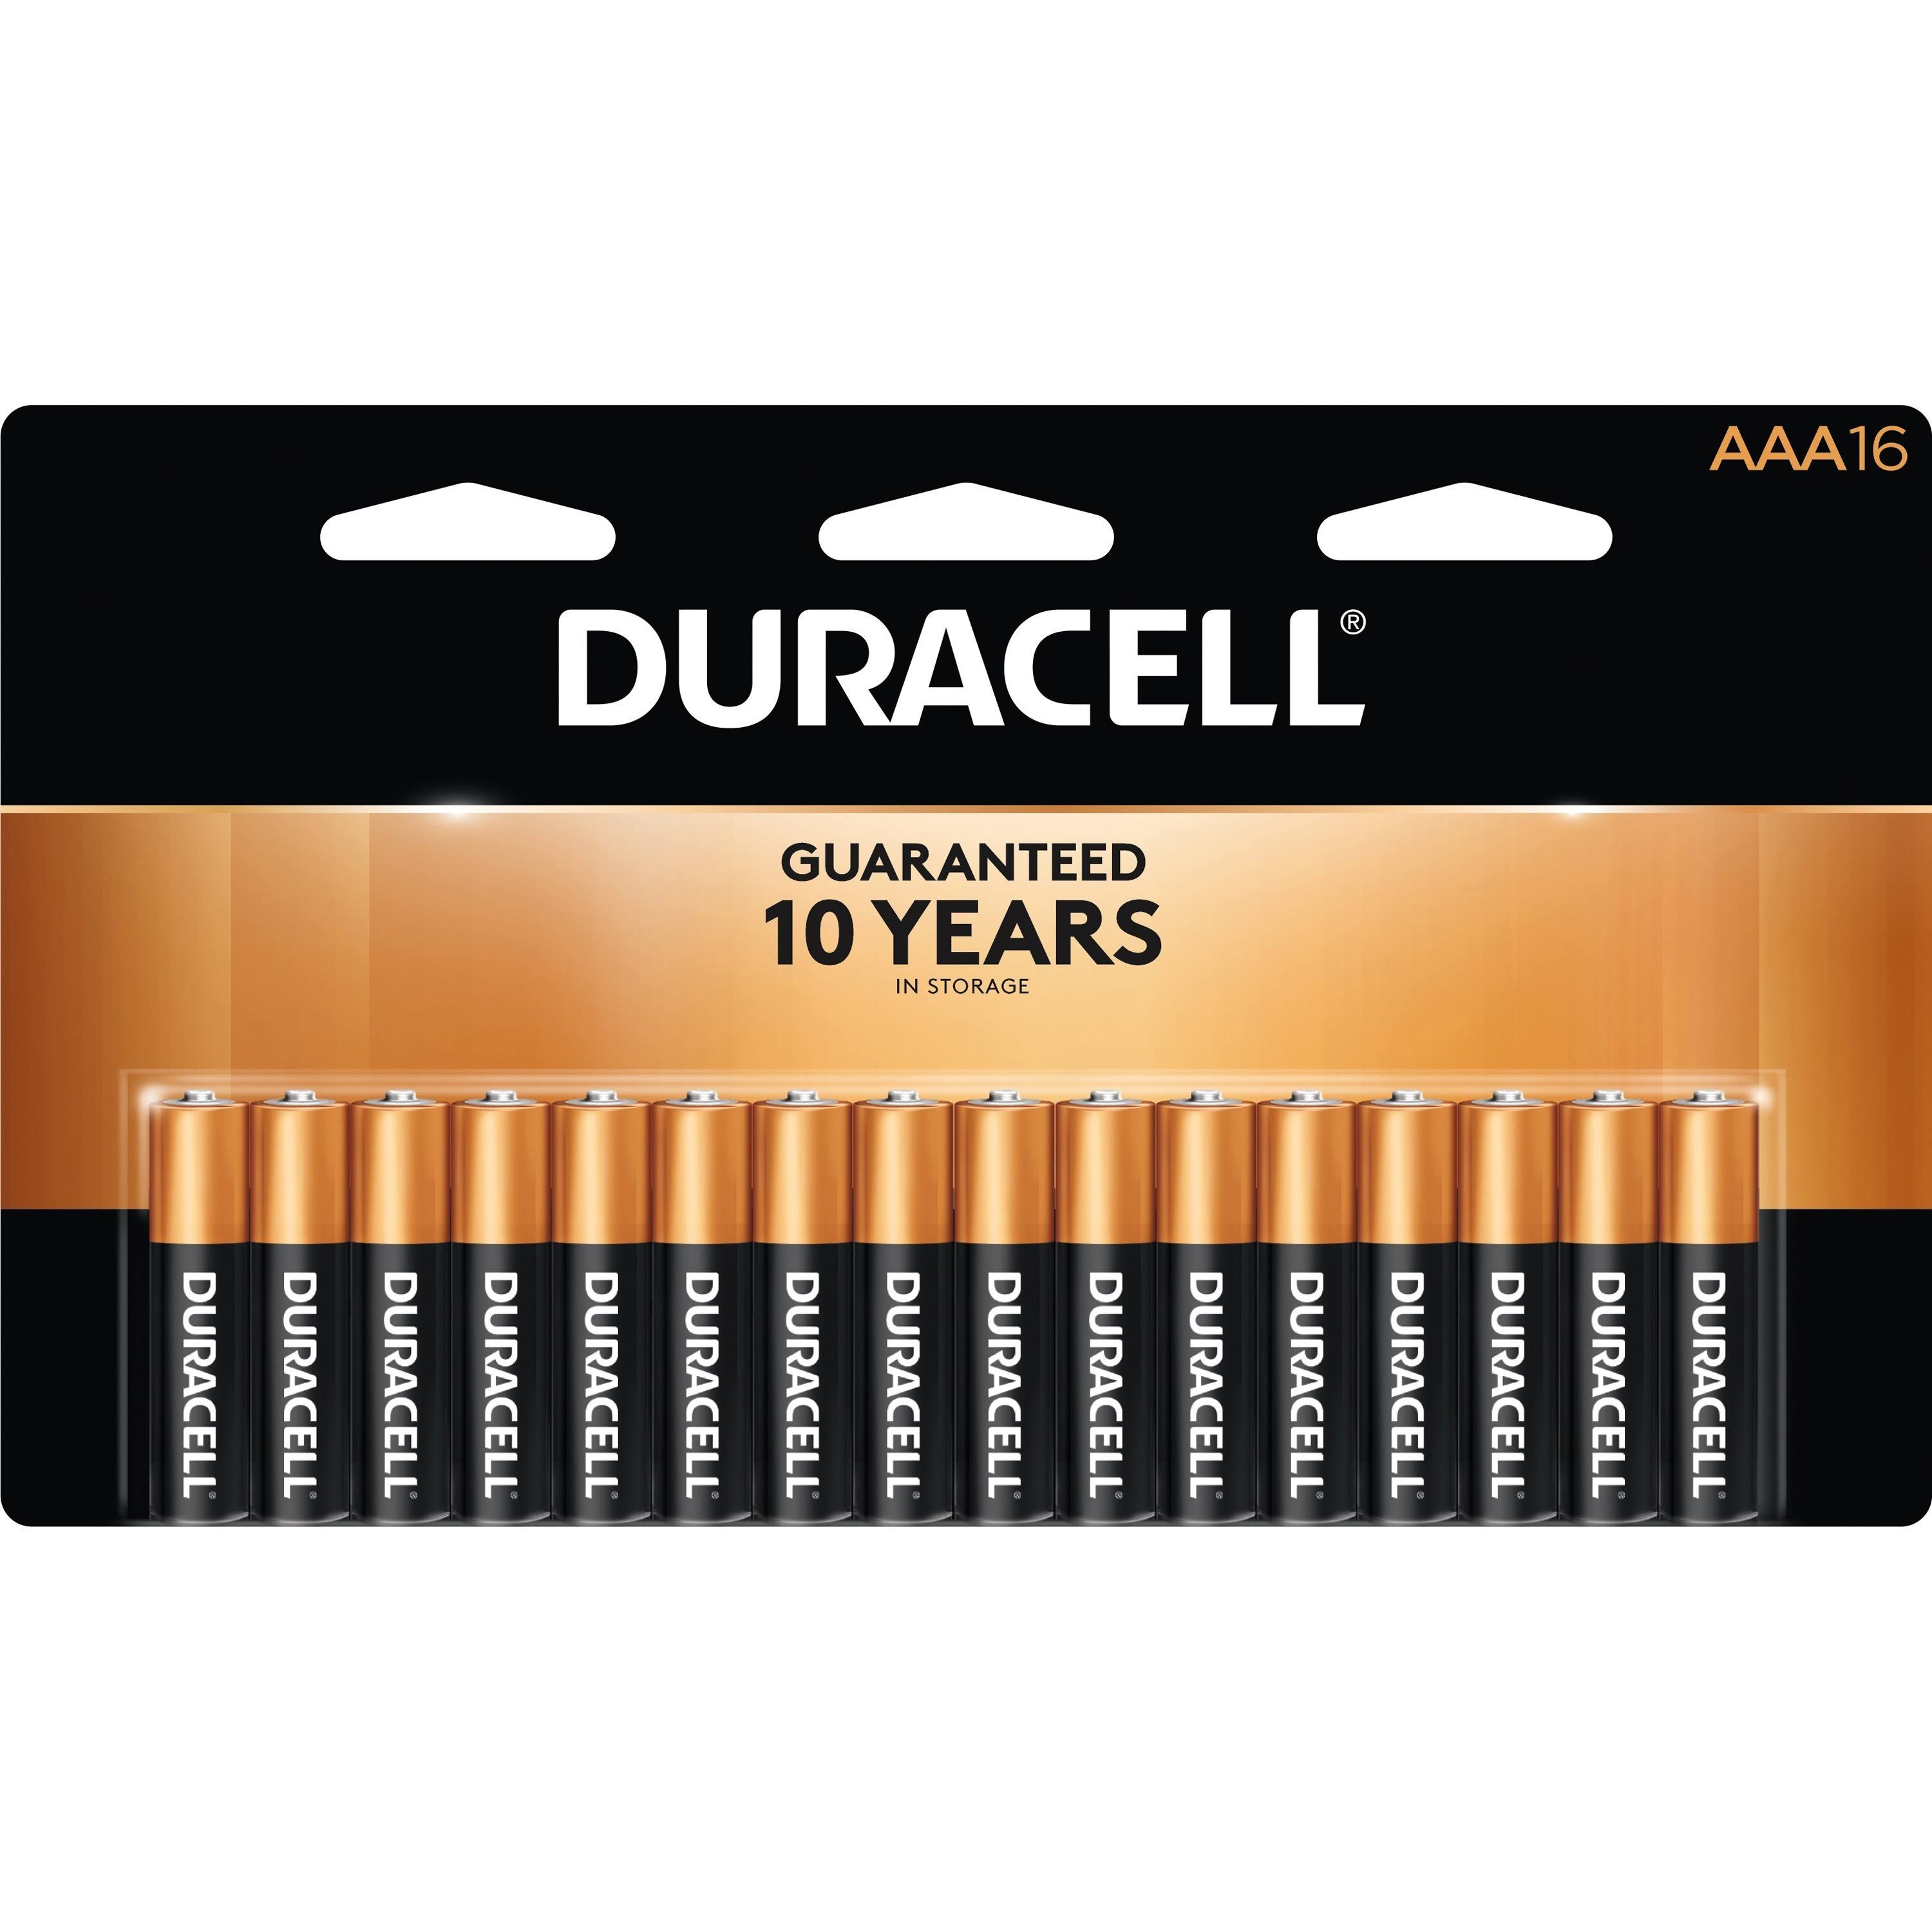 Duracell Alkaline AAA Battery - 16 pack